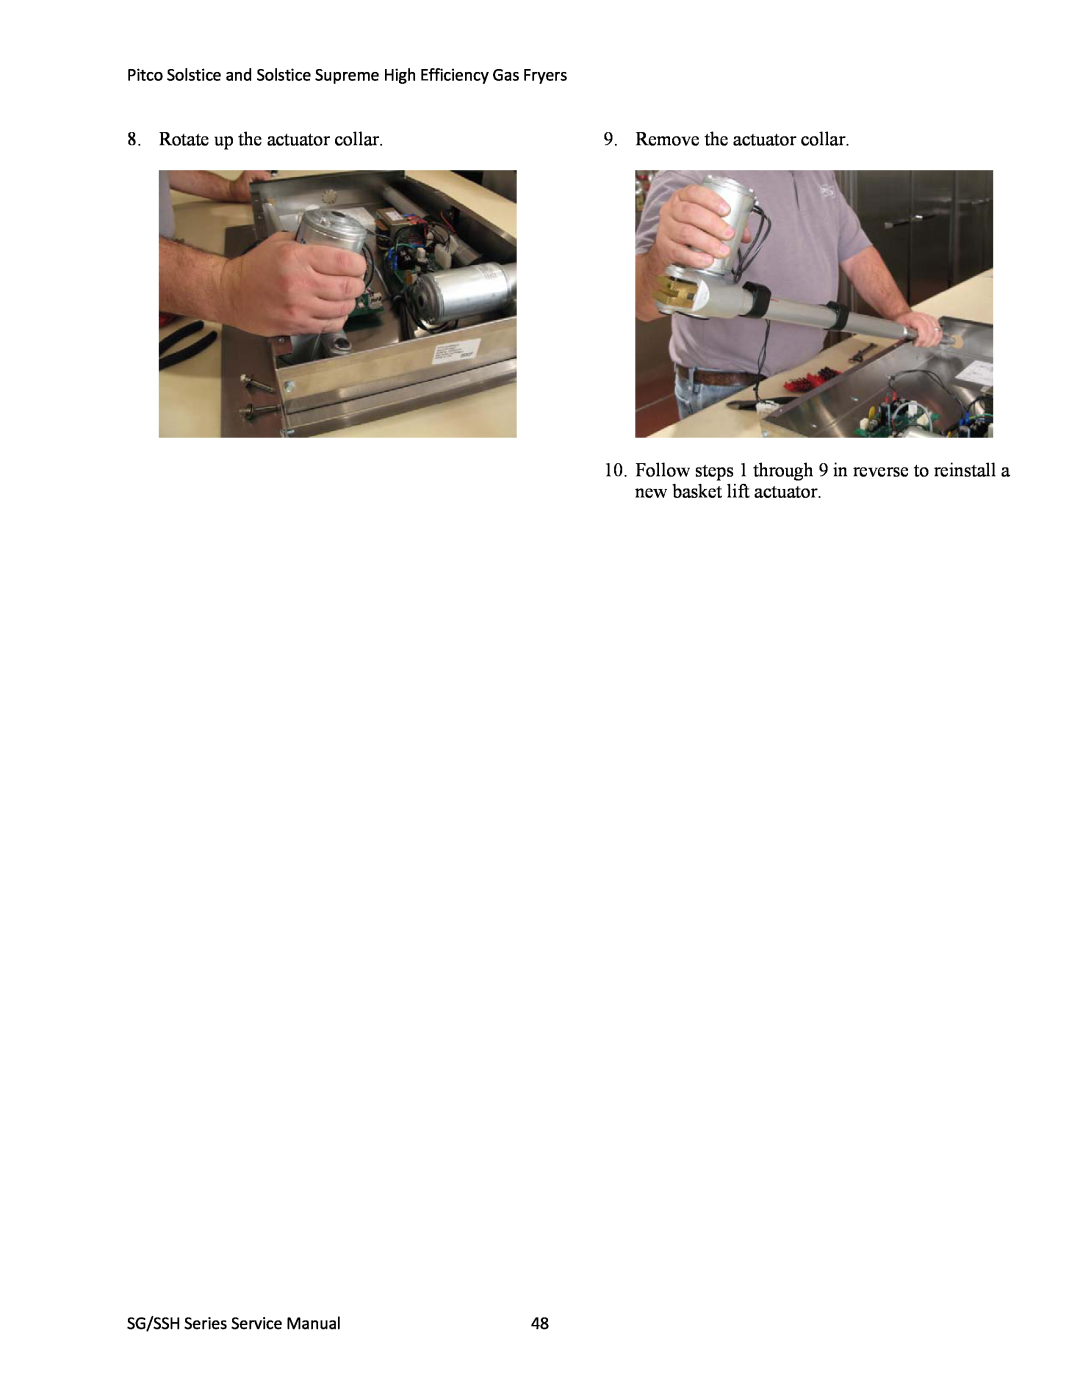 Pitco Frialator L22-345 manual Rotate up the actuator collar, Remove the actuator collar, SG/SSH Series Service Manual 